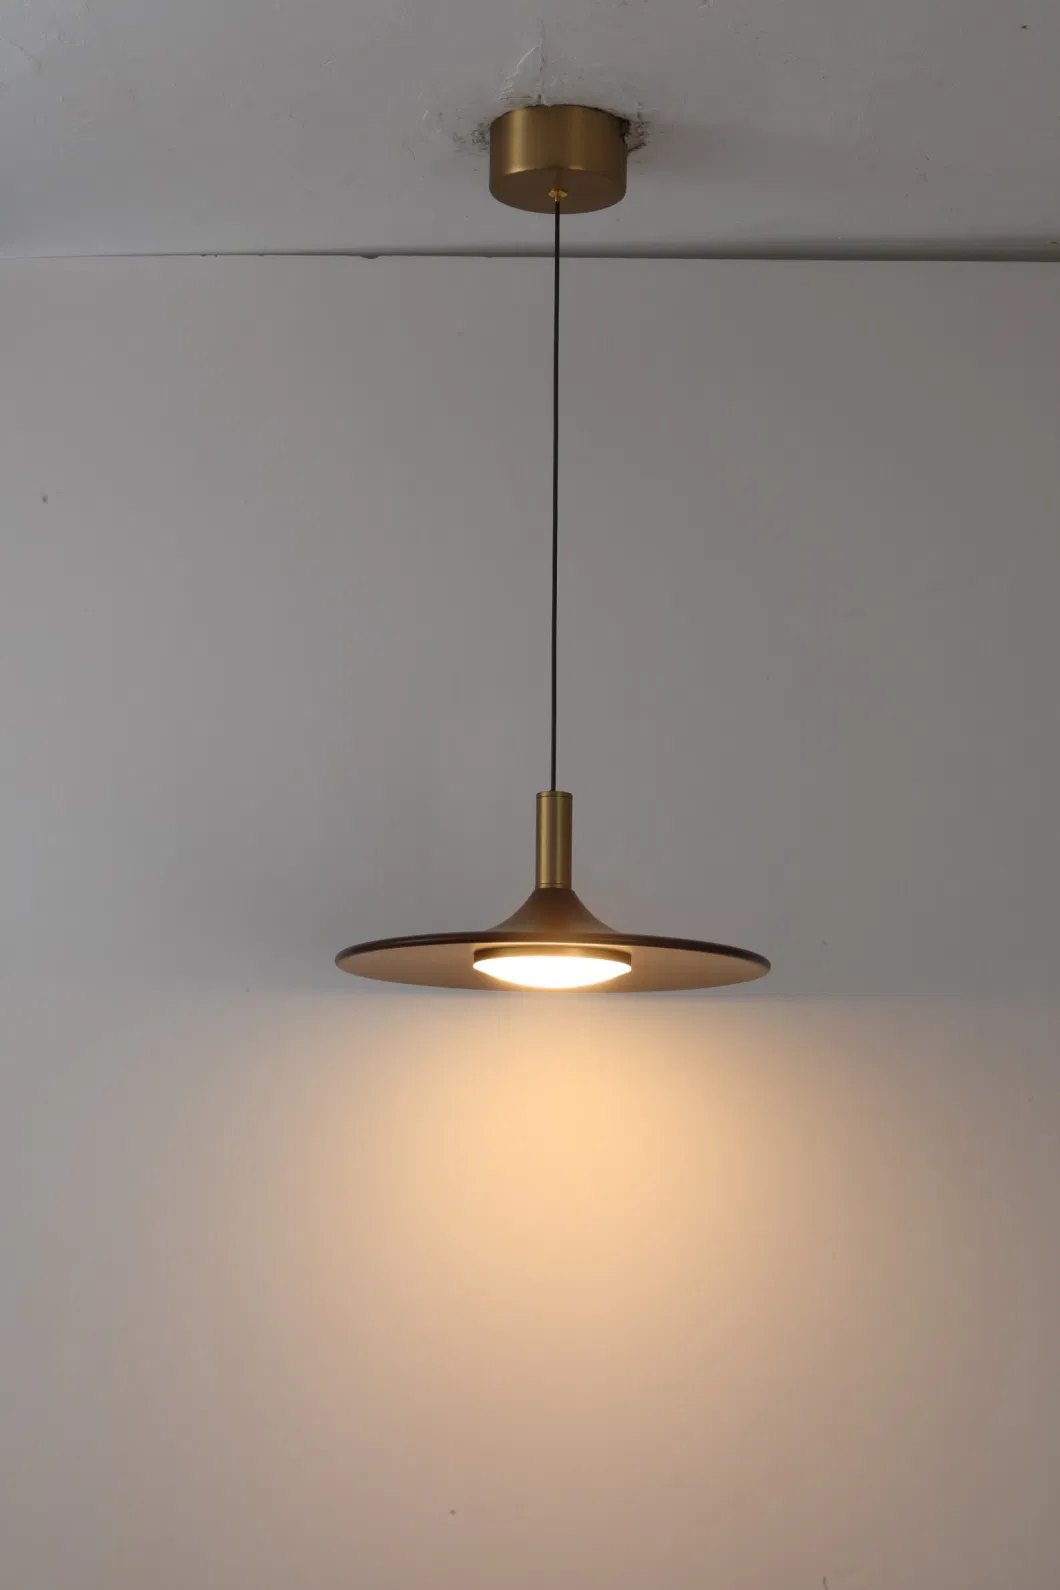 Masivel Lighting Factory Styliship Modern Indoor LED Pendant Light with Brass+Wooden Color for Home Hotel Loft